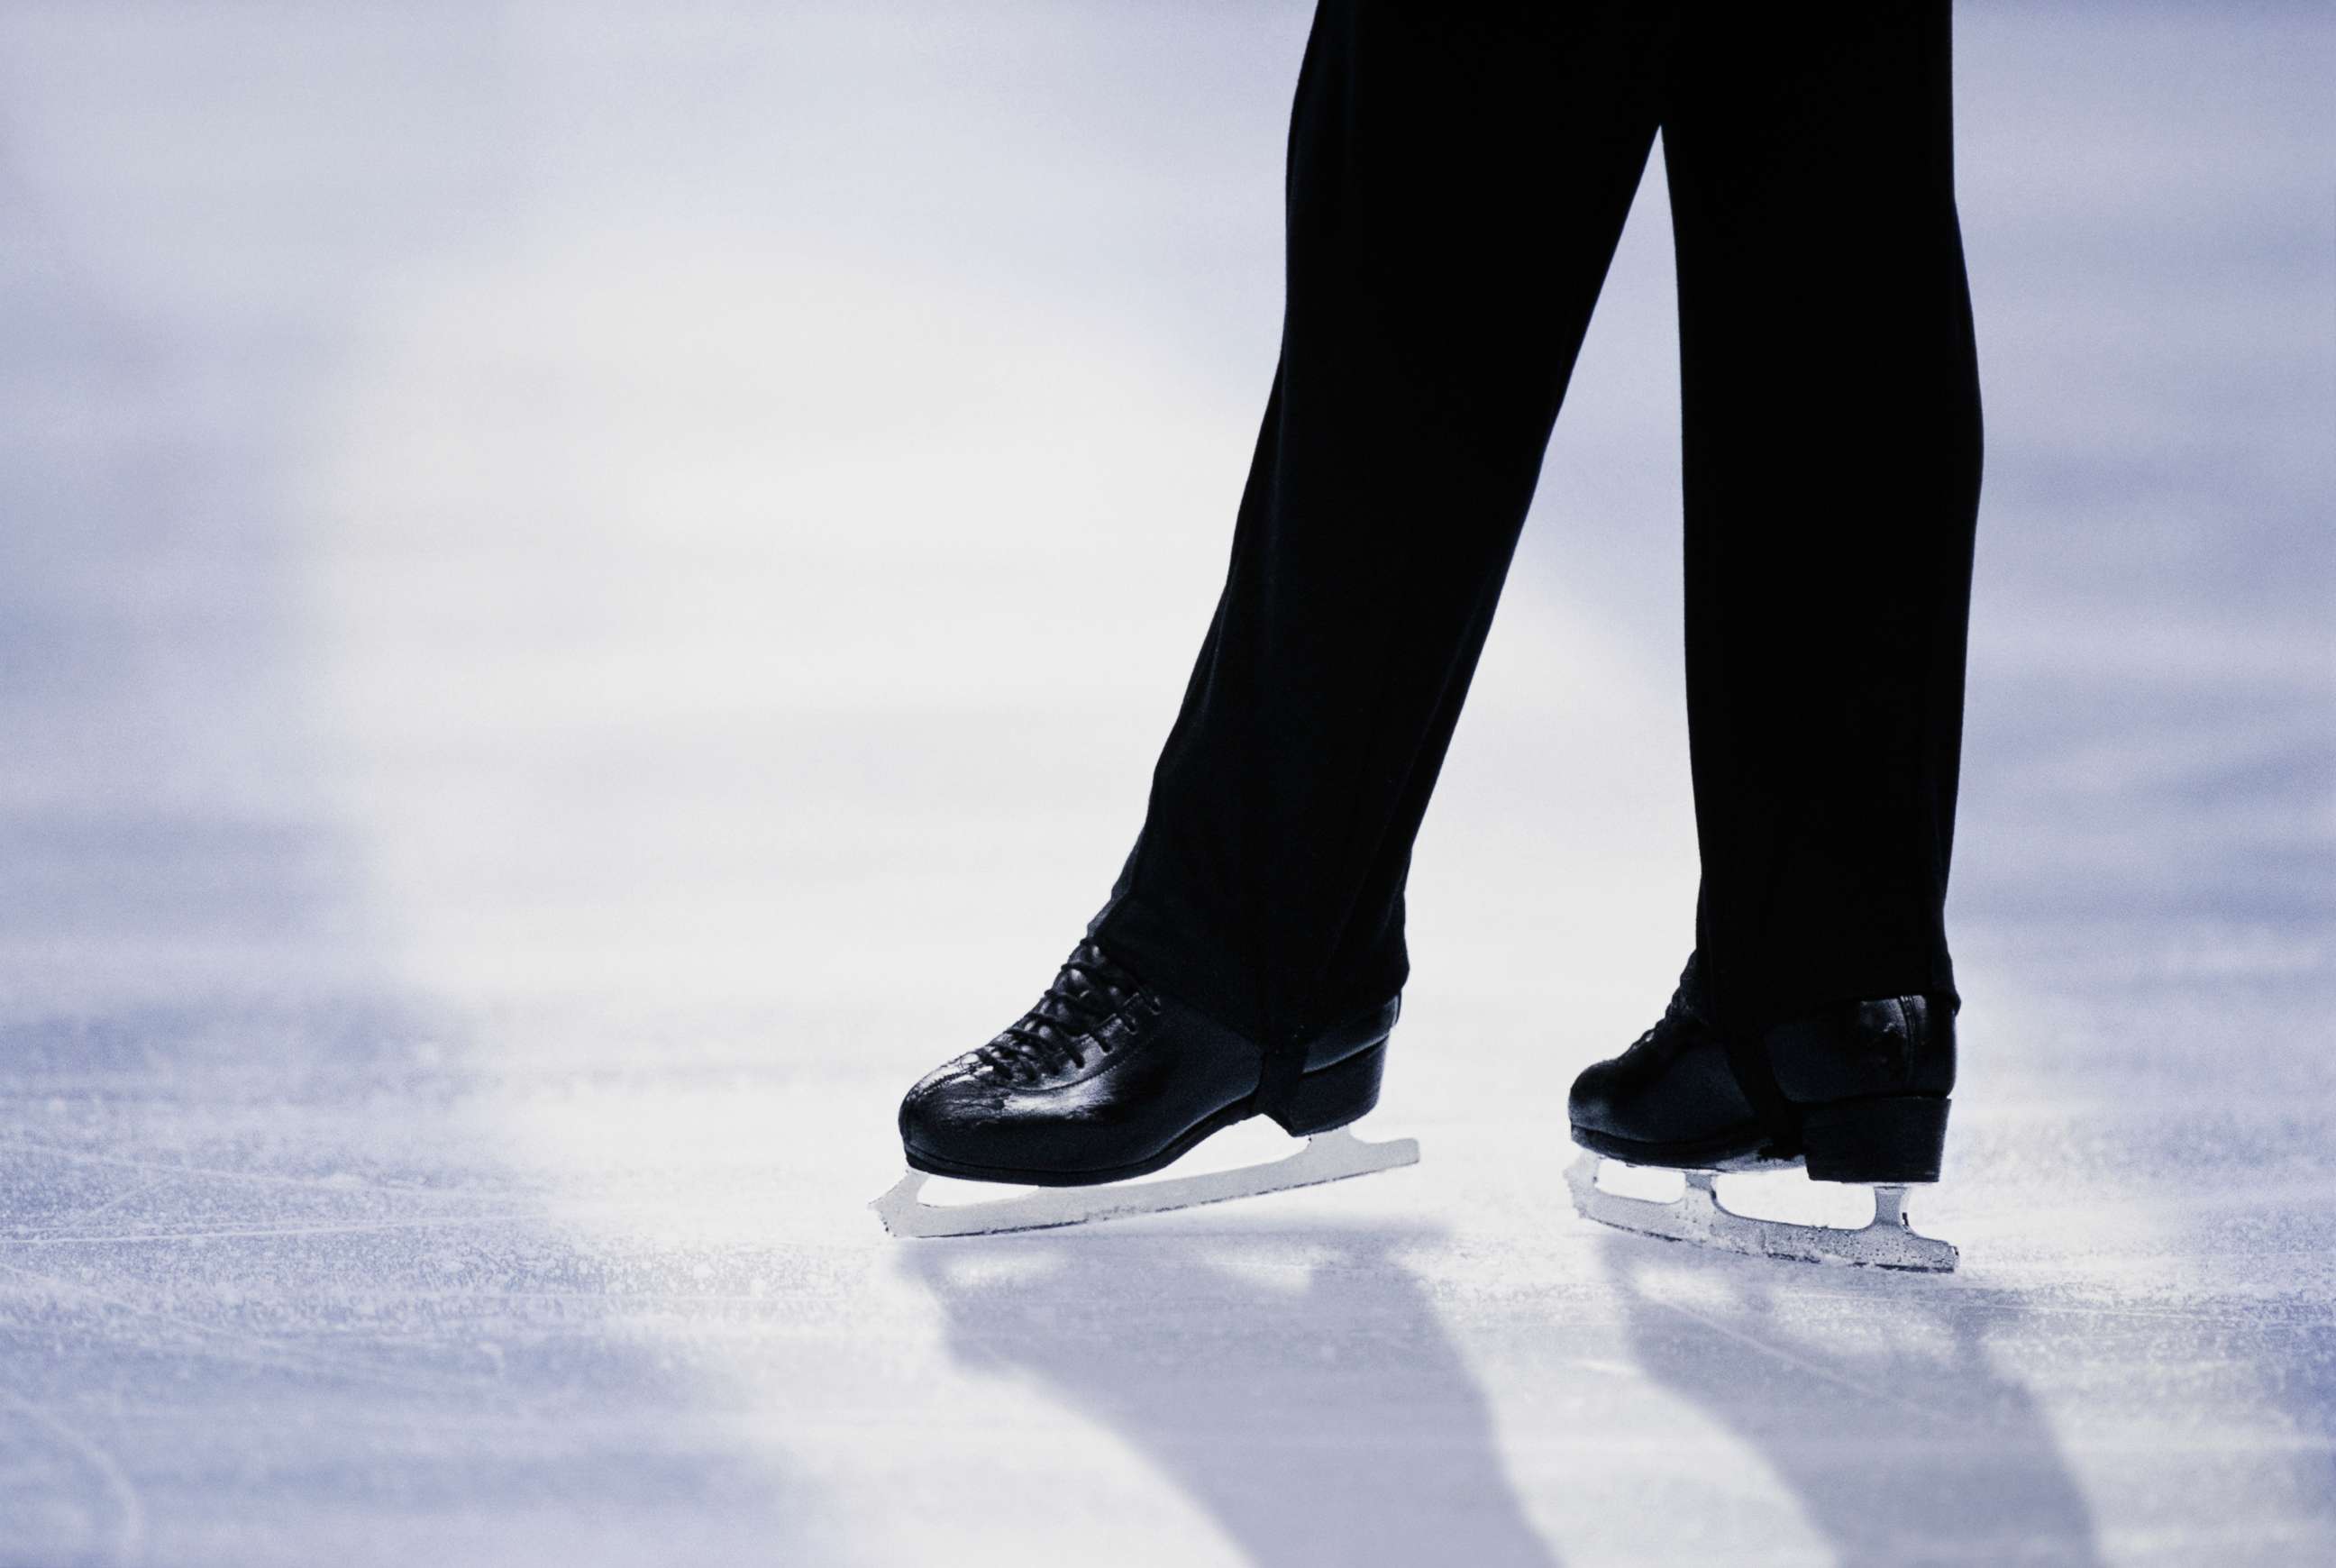 PHOTO: Stock photo of a man wearing ice skates.